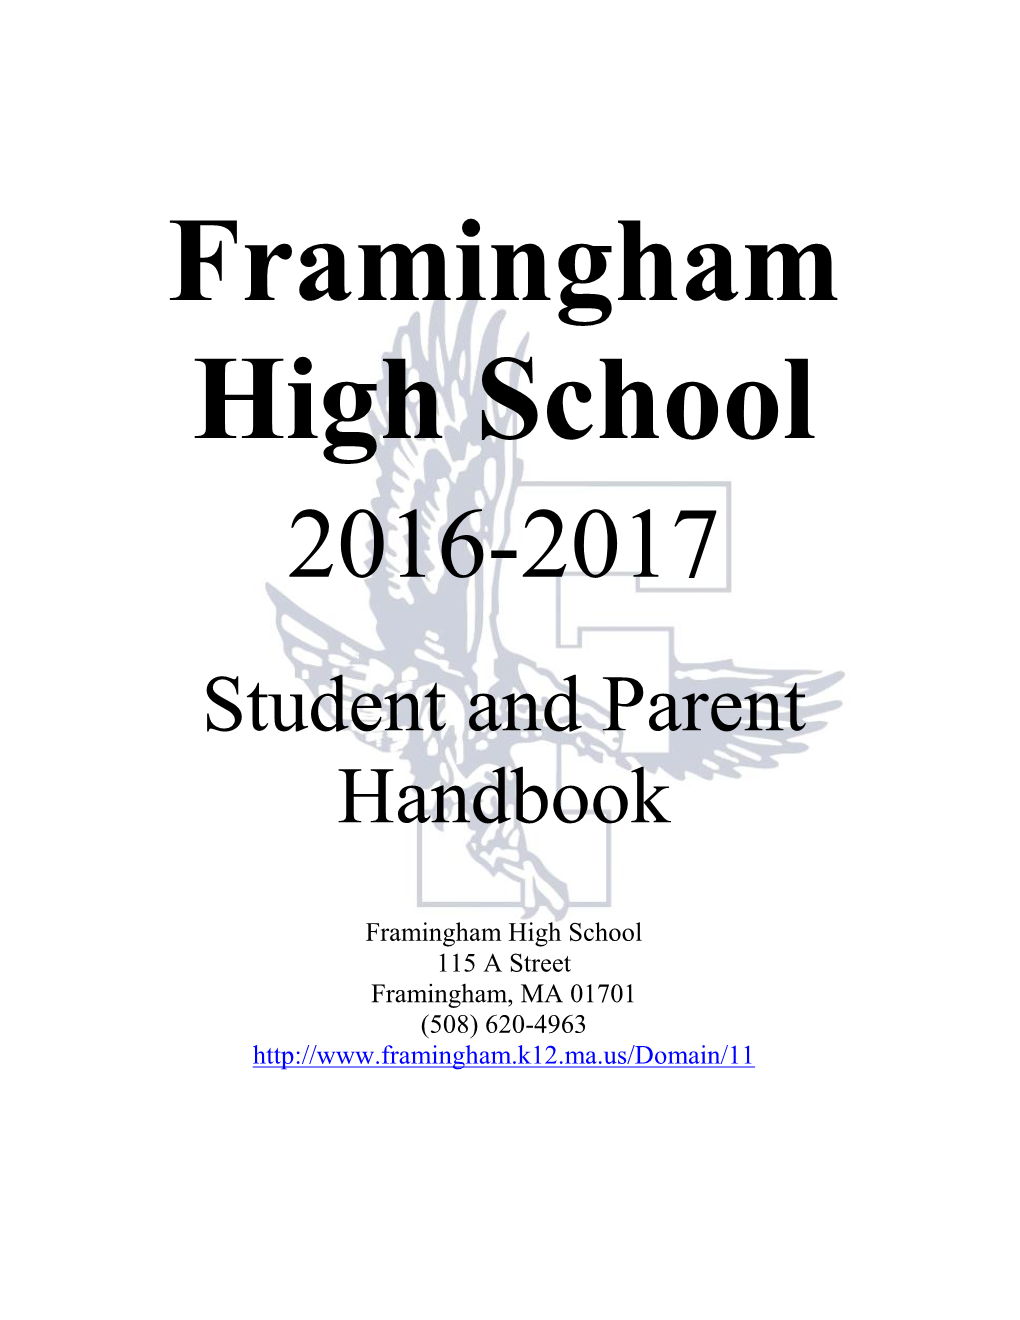 Student and Parent Handbook